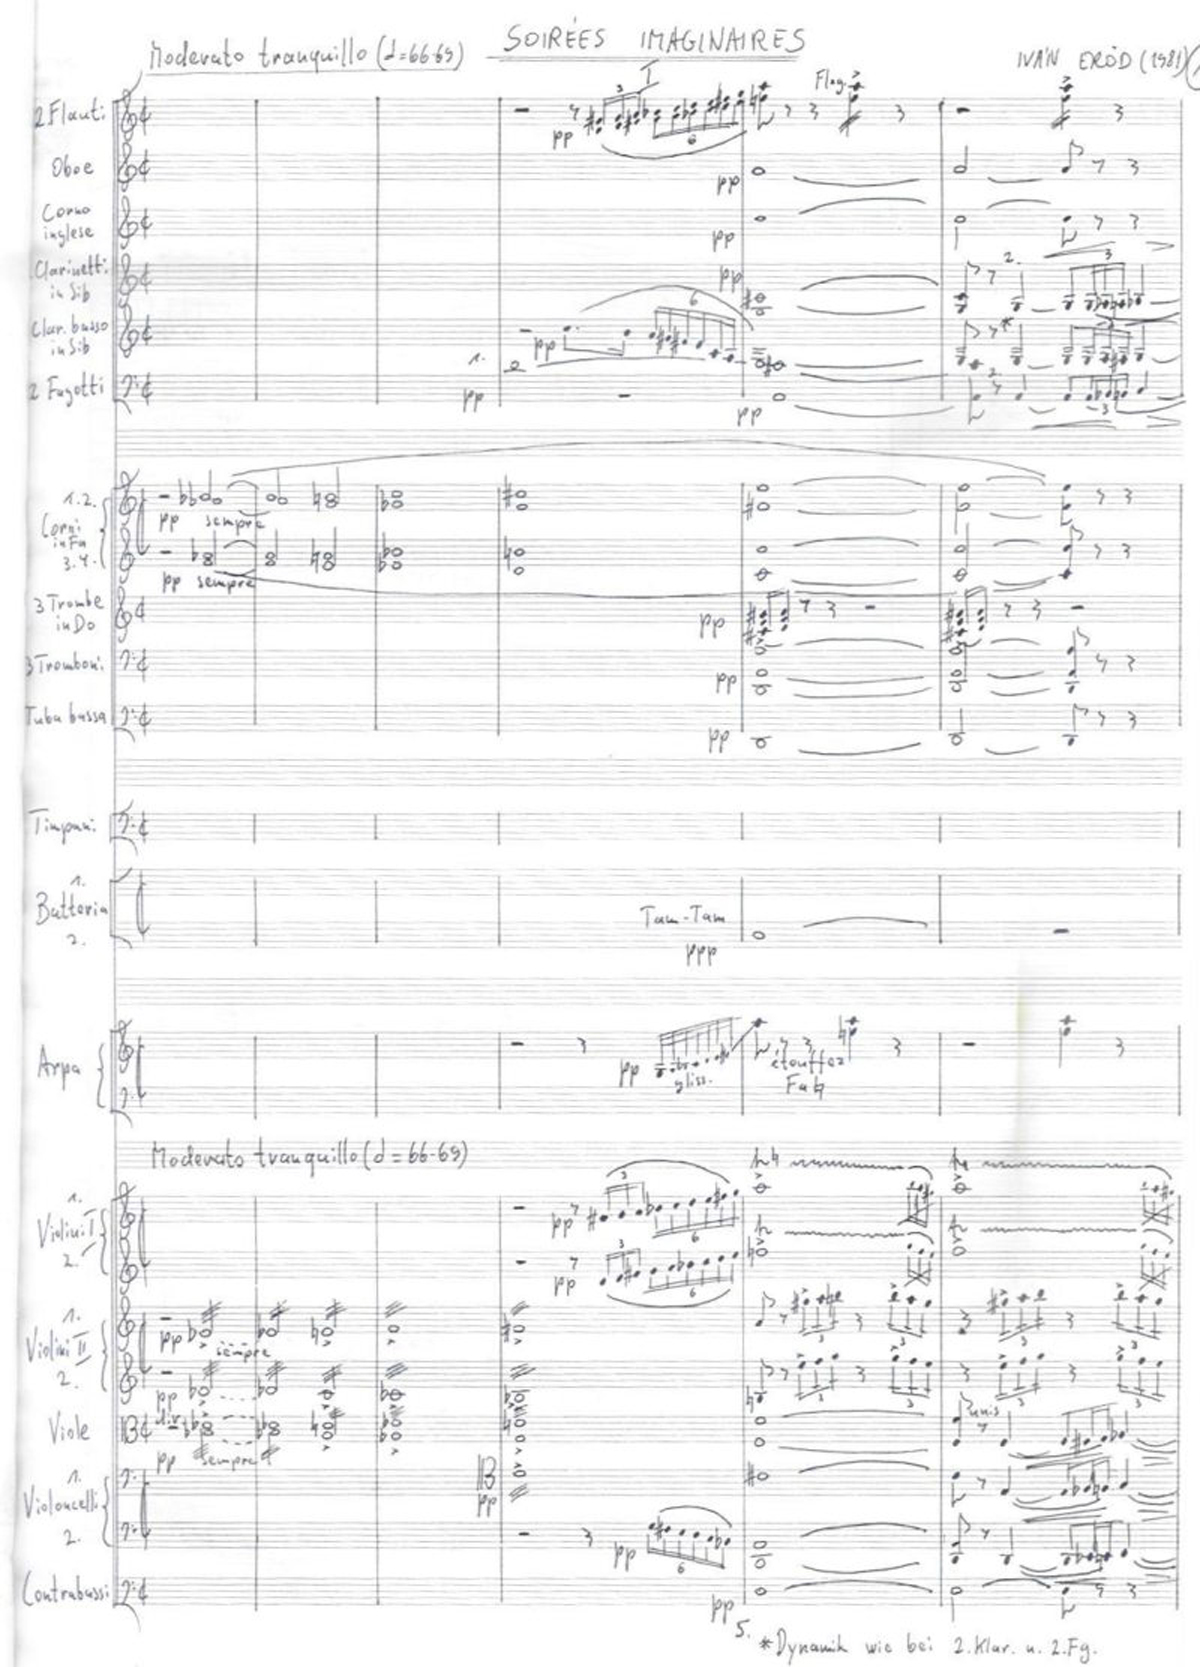 Ivan Eröd, Manuskript – Soirées imaginaires Op. 38 / © Musikverlag Doblinger, abgebildet mit freundicher Genehmigung des Verlages